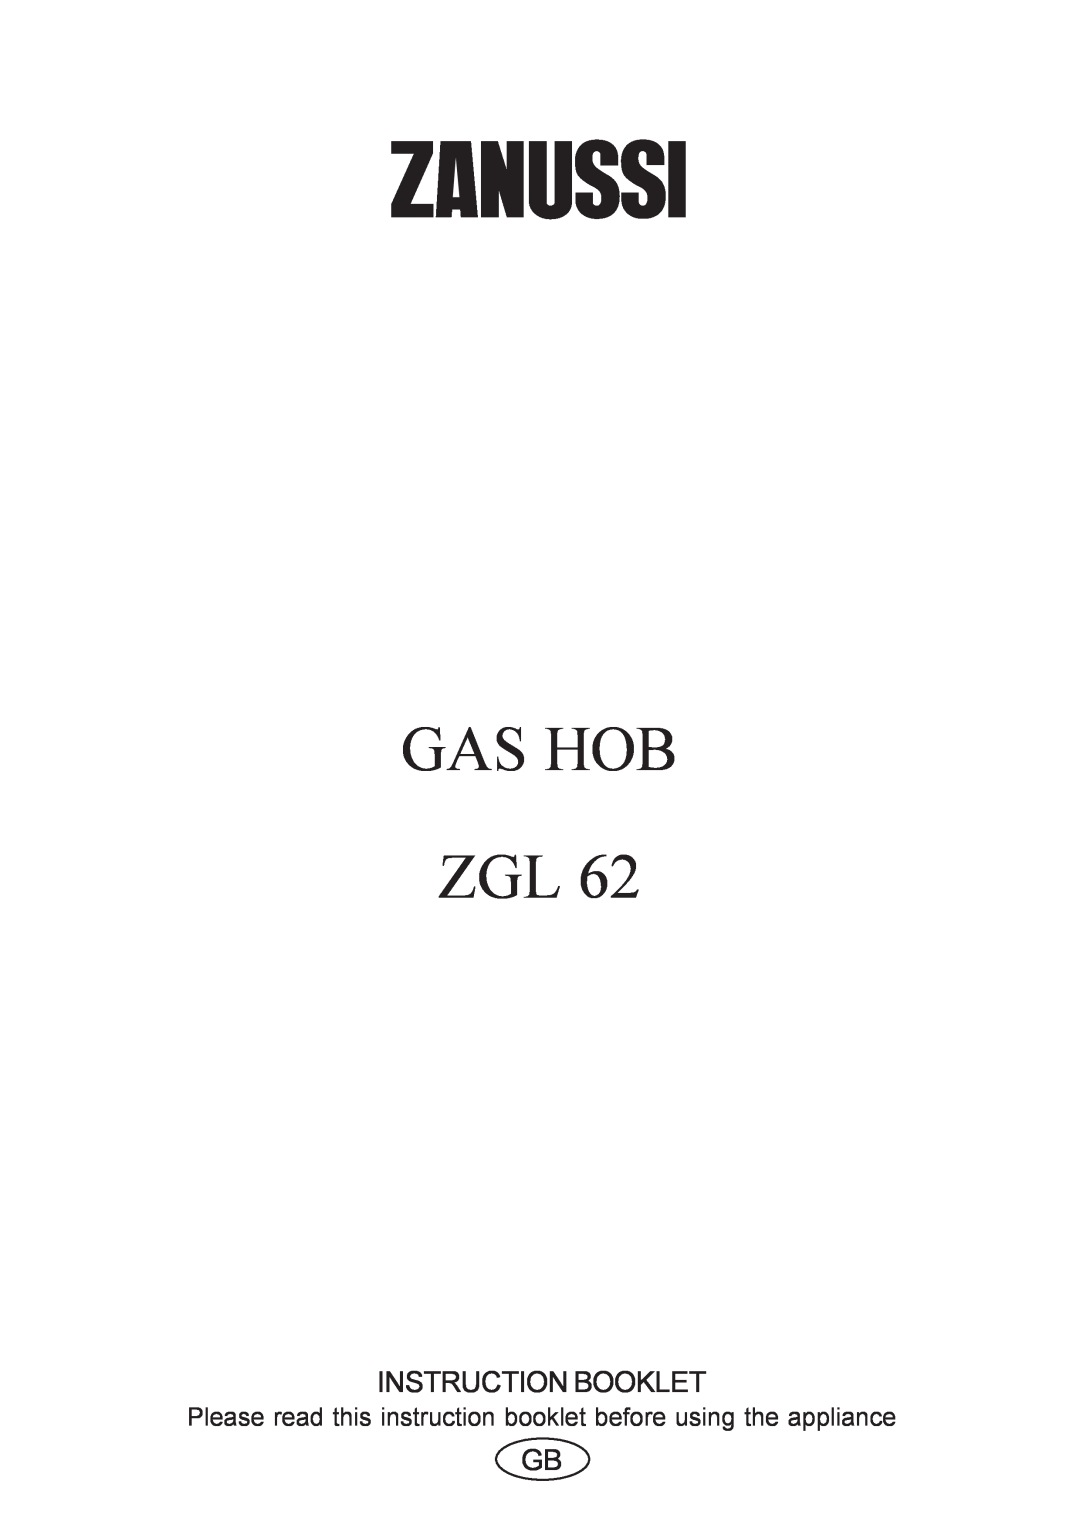 Zanussi ZGL 62 manual Gas Hobs Zgl, Instruction Booklet 